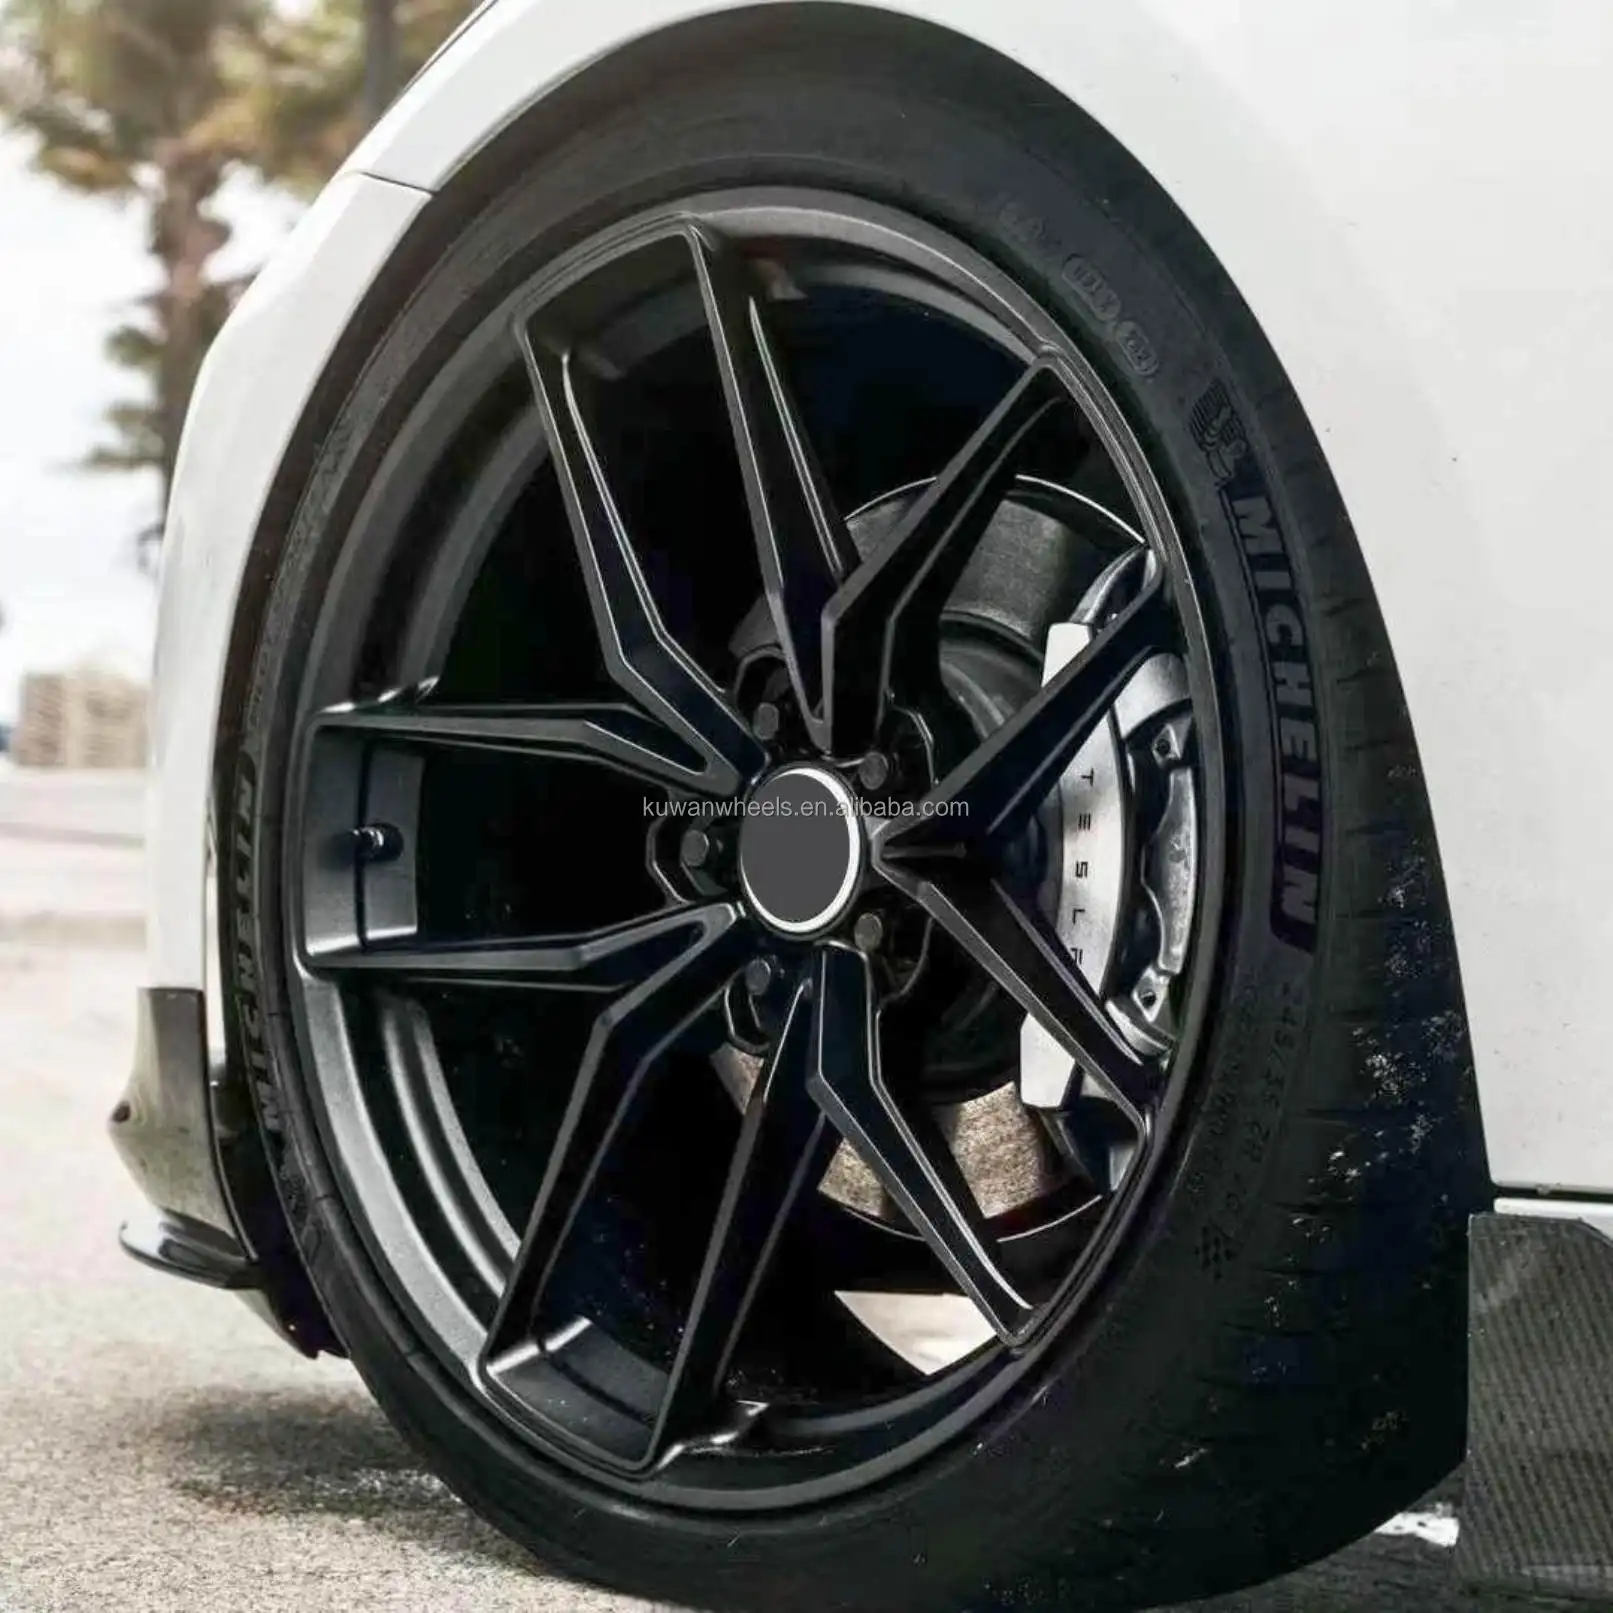 Kw 18 19 20 21 22 23 24 inch wheels 5x112 5x114.3 5x120 chrome forged alloy wheels rims For bmw wheels Audi lexus Porsche